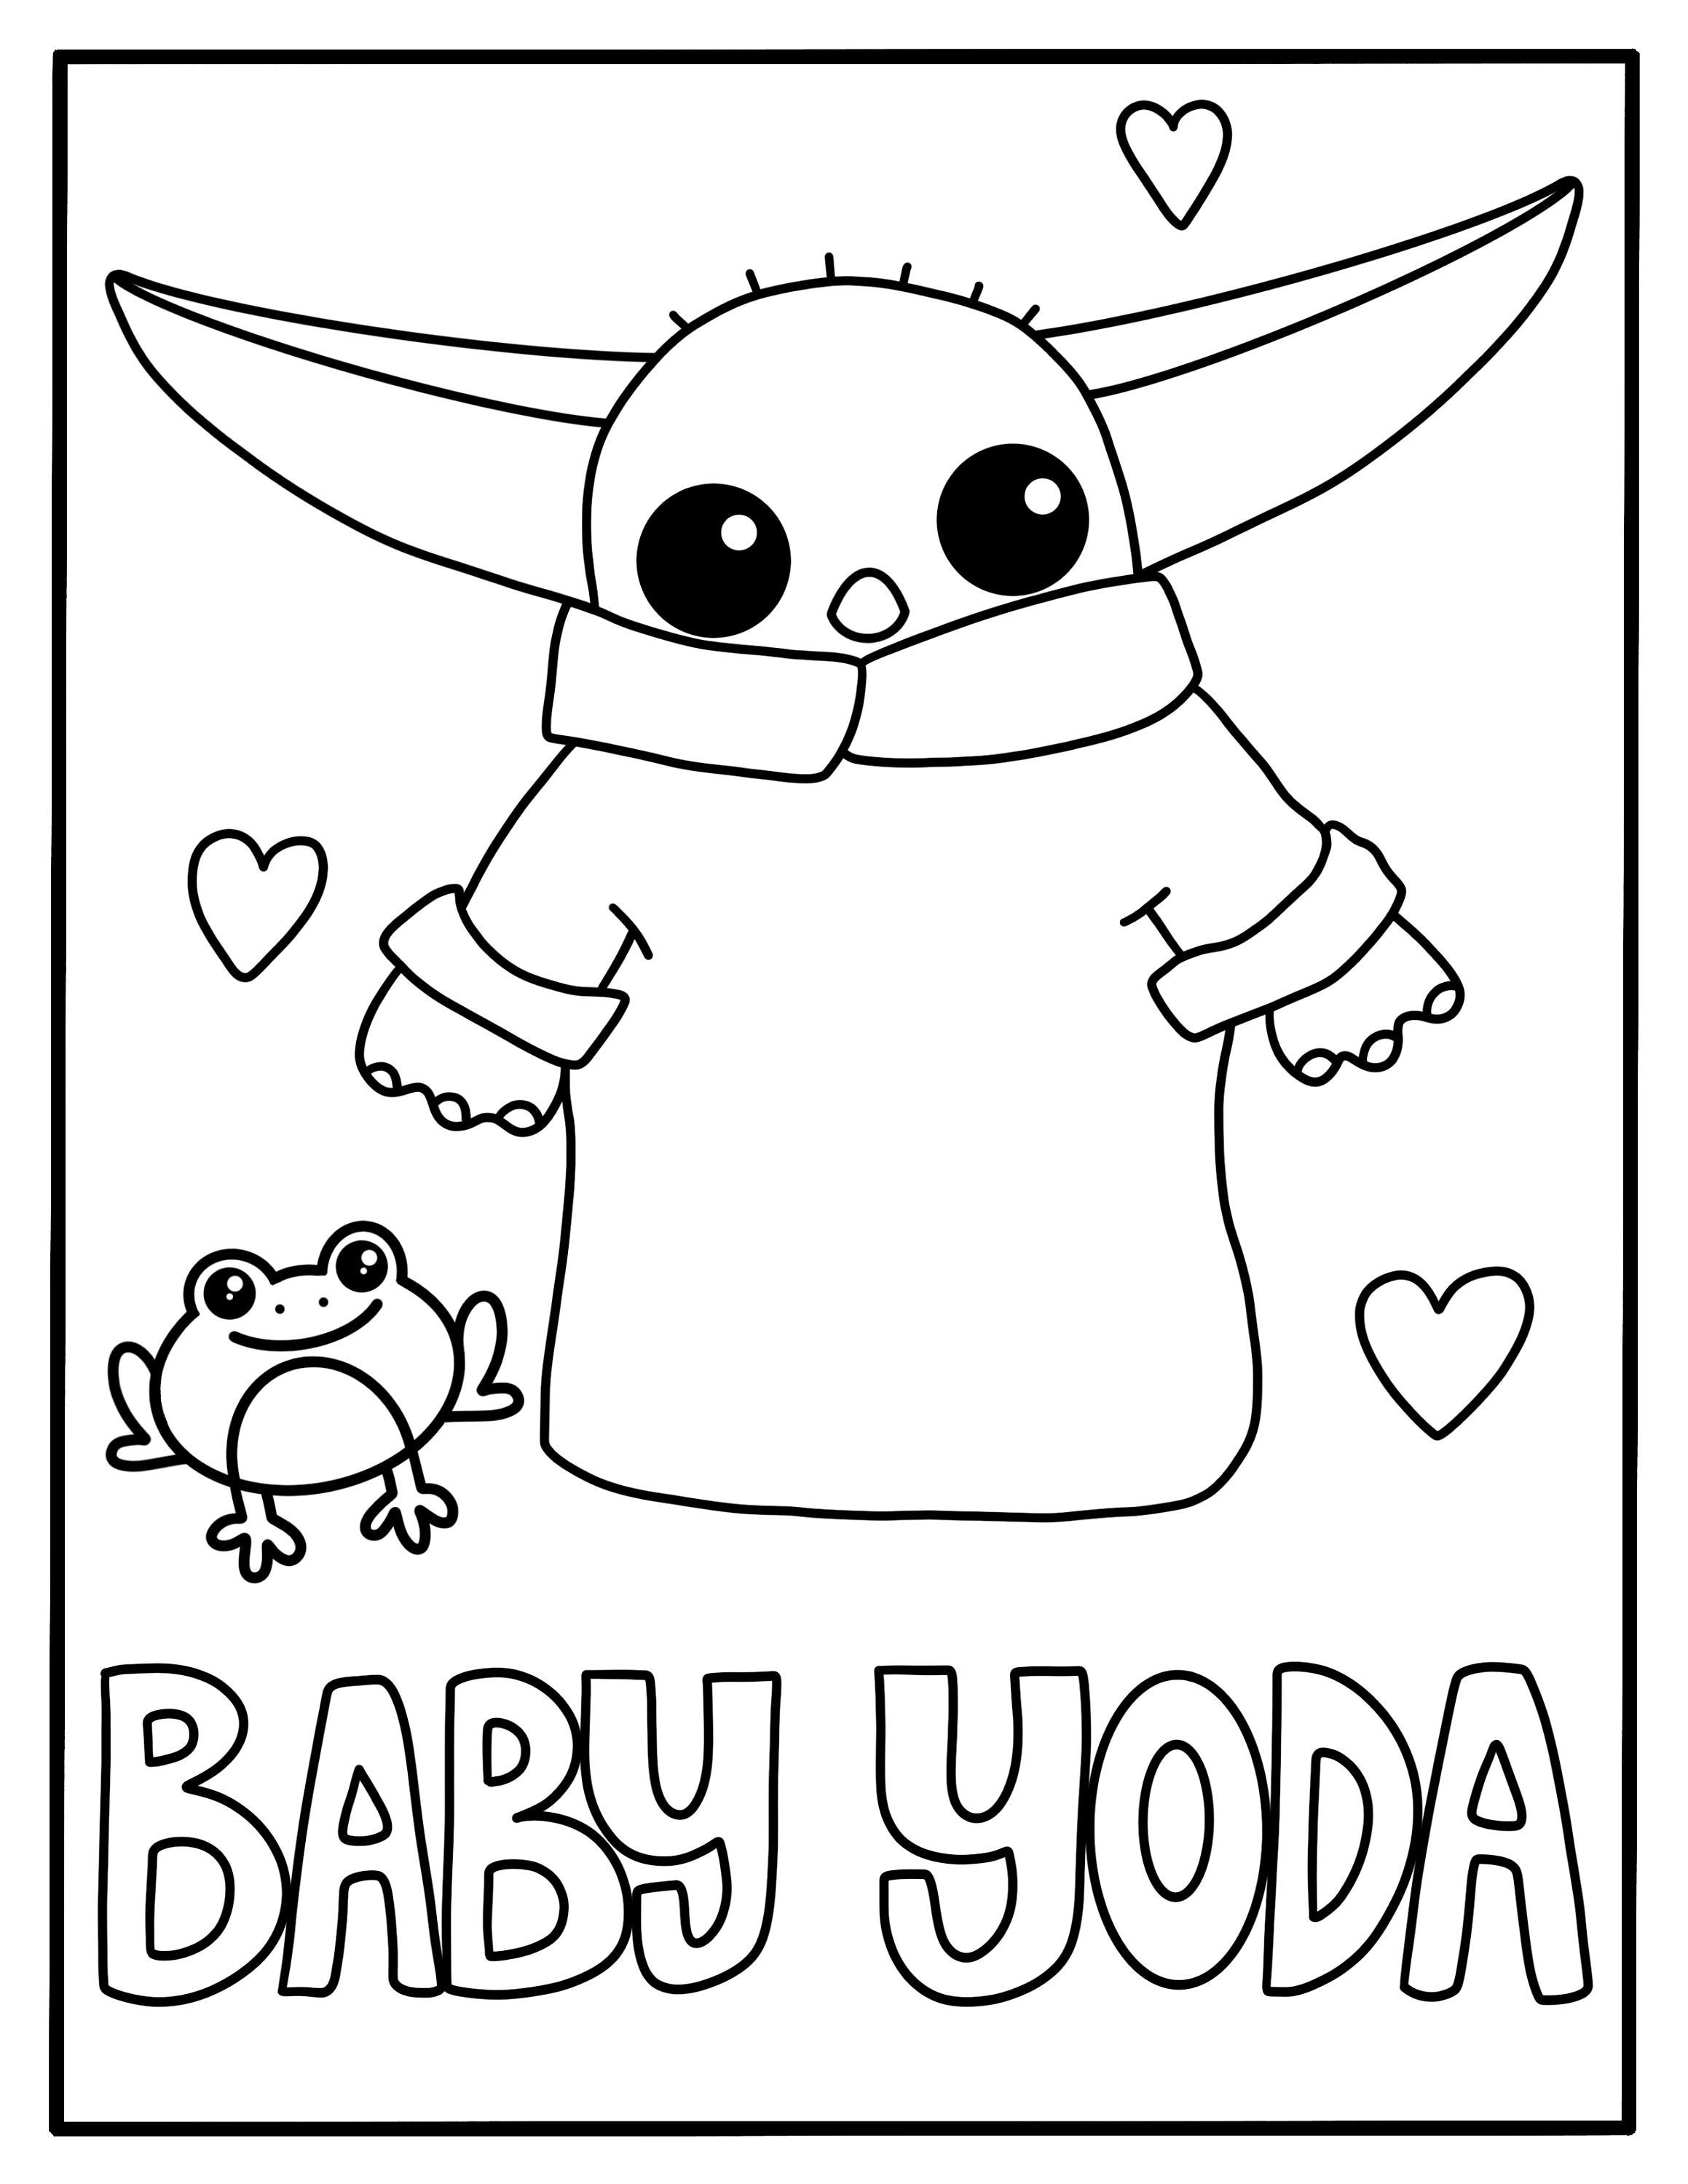 Baby yoda coloring page